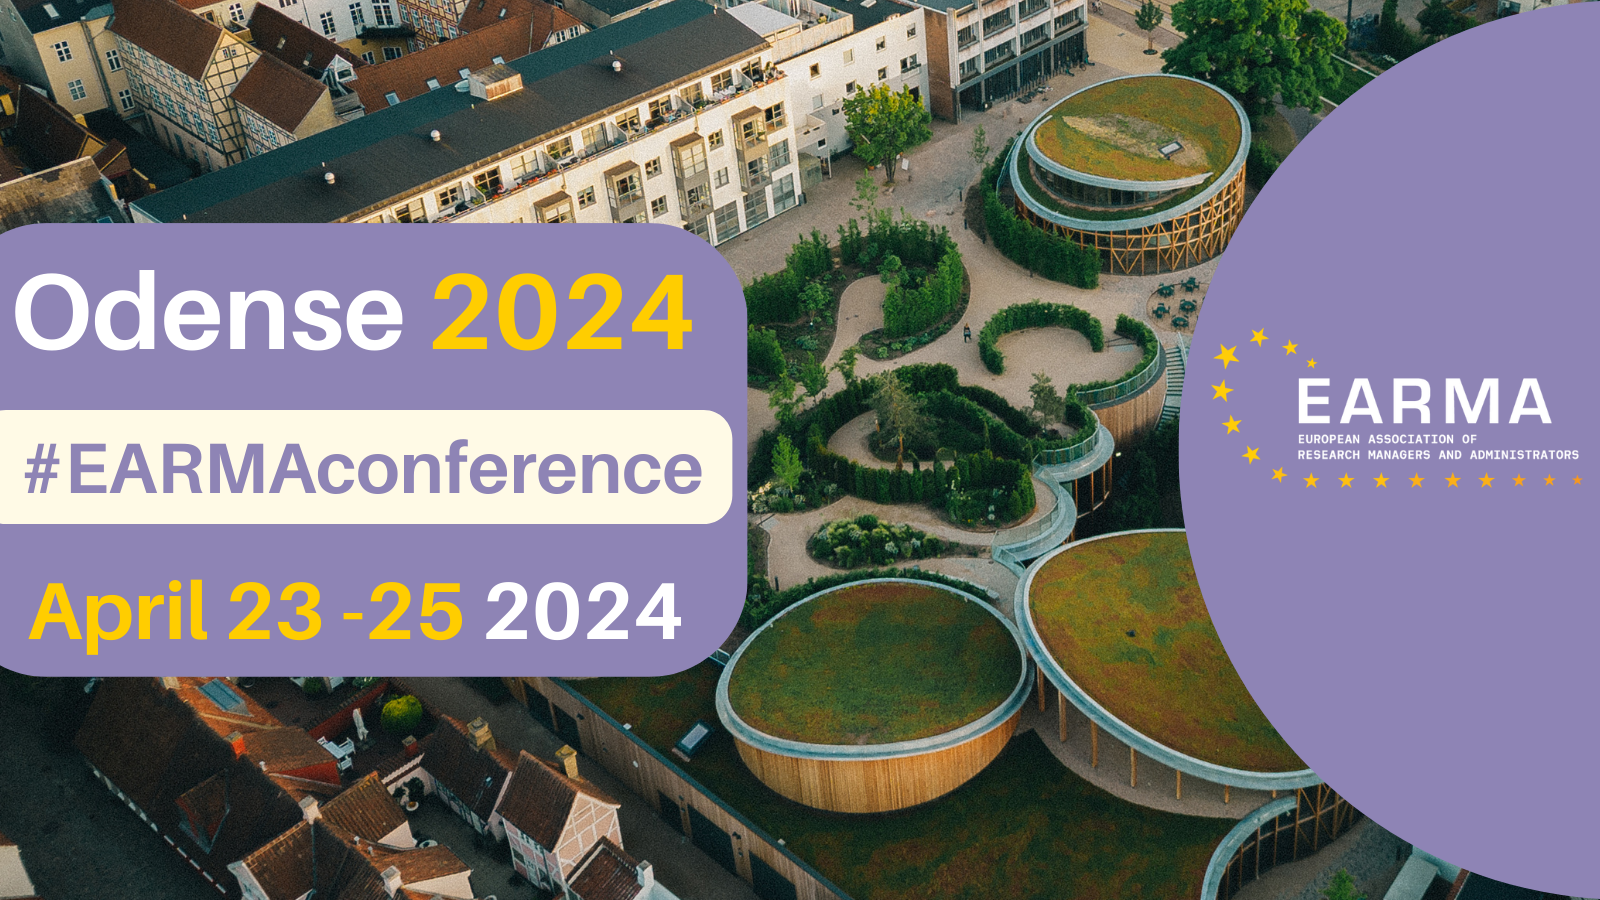 EARMA Conference Odense 2024